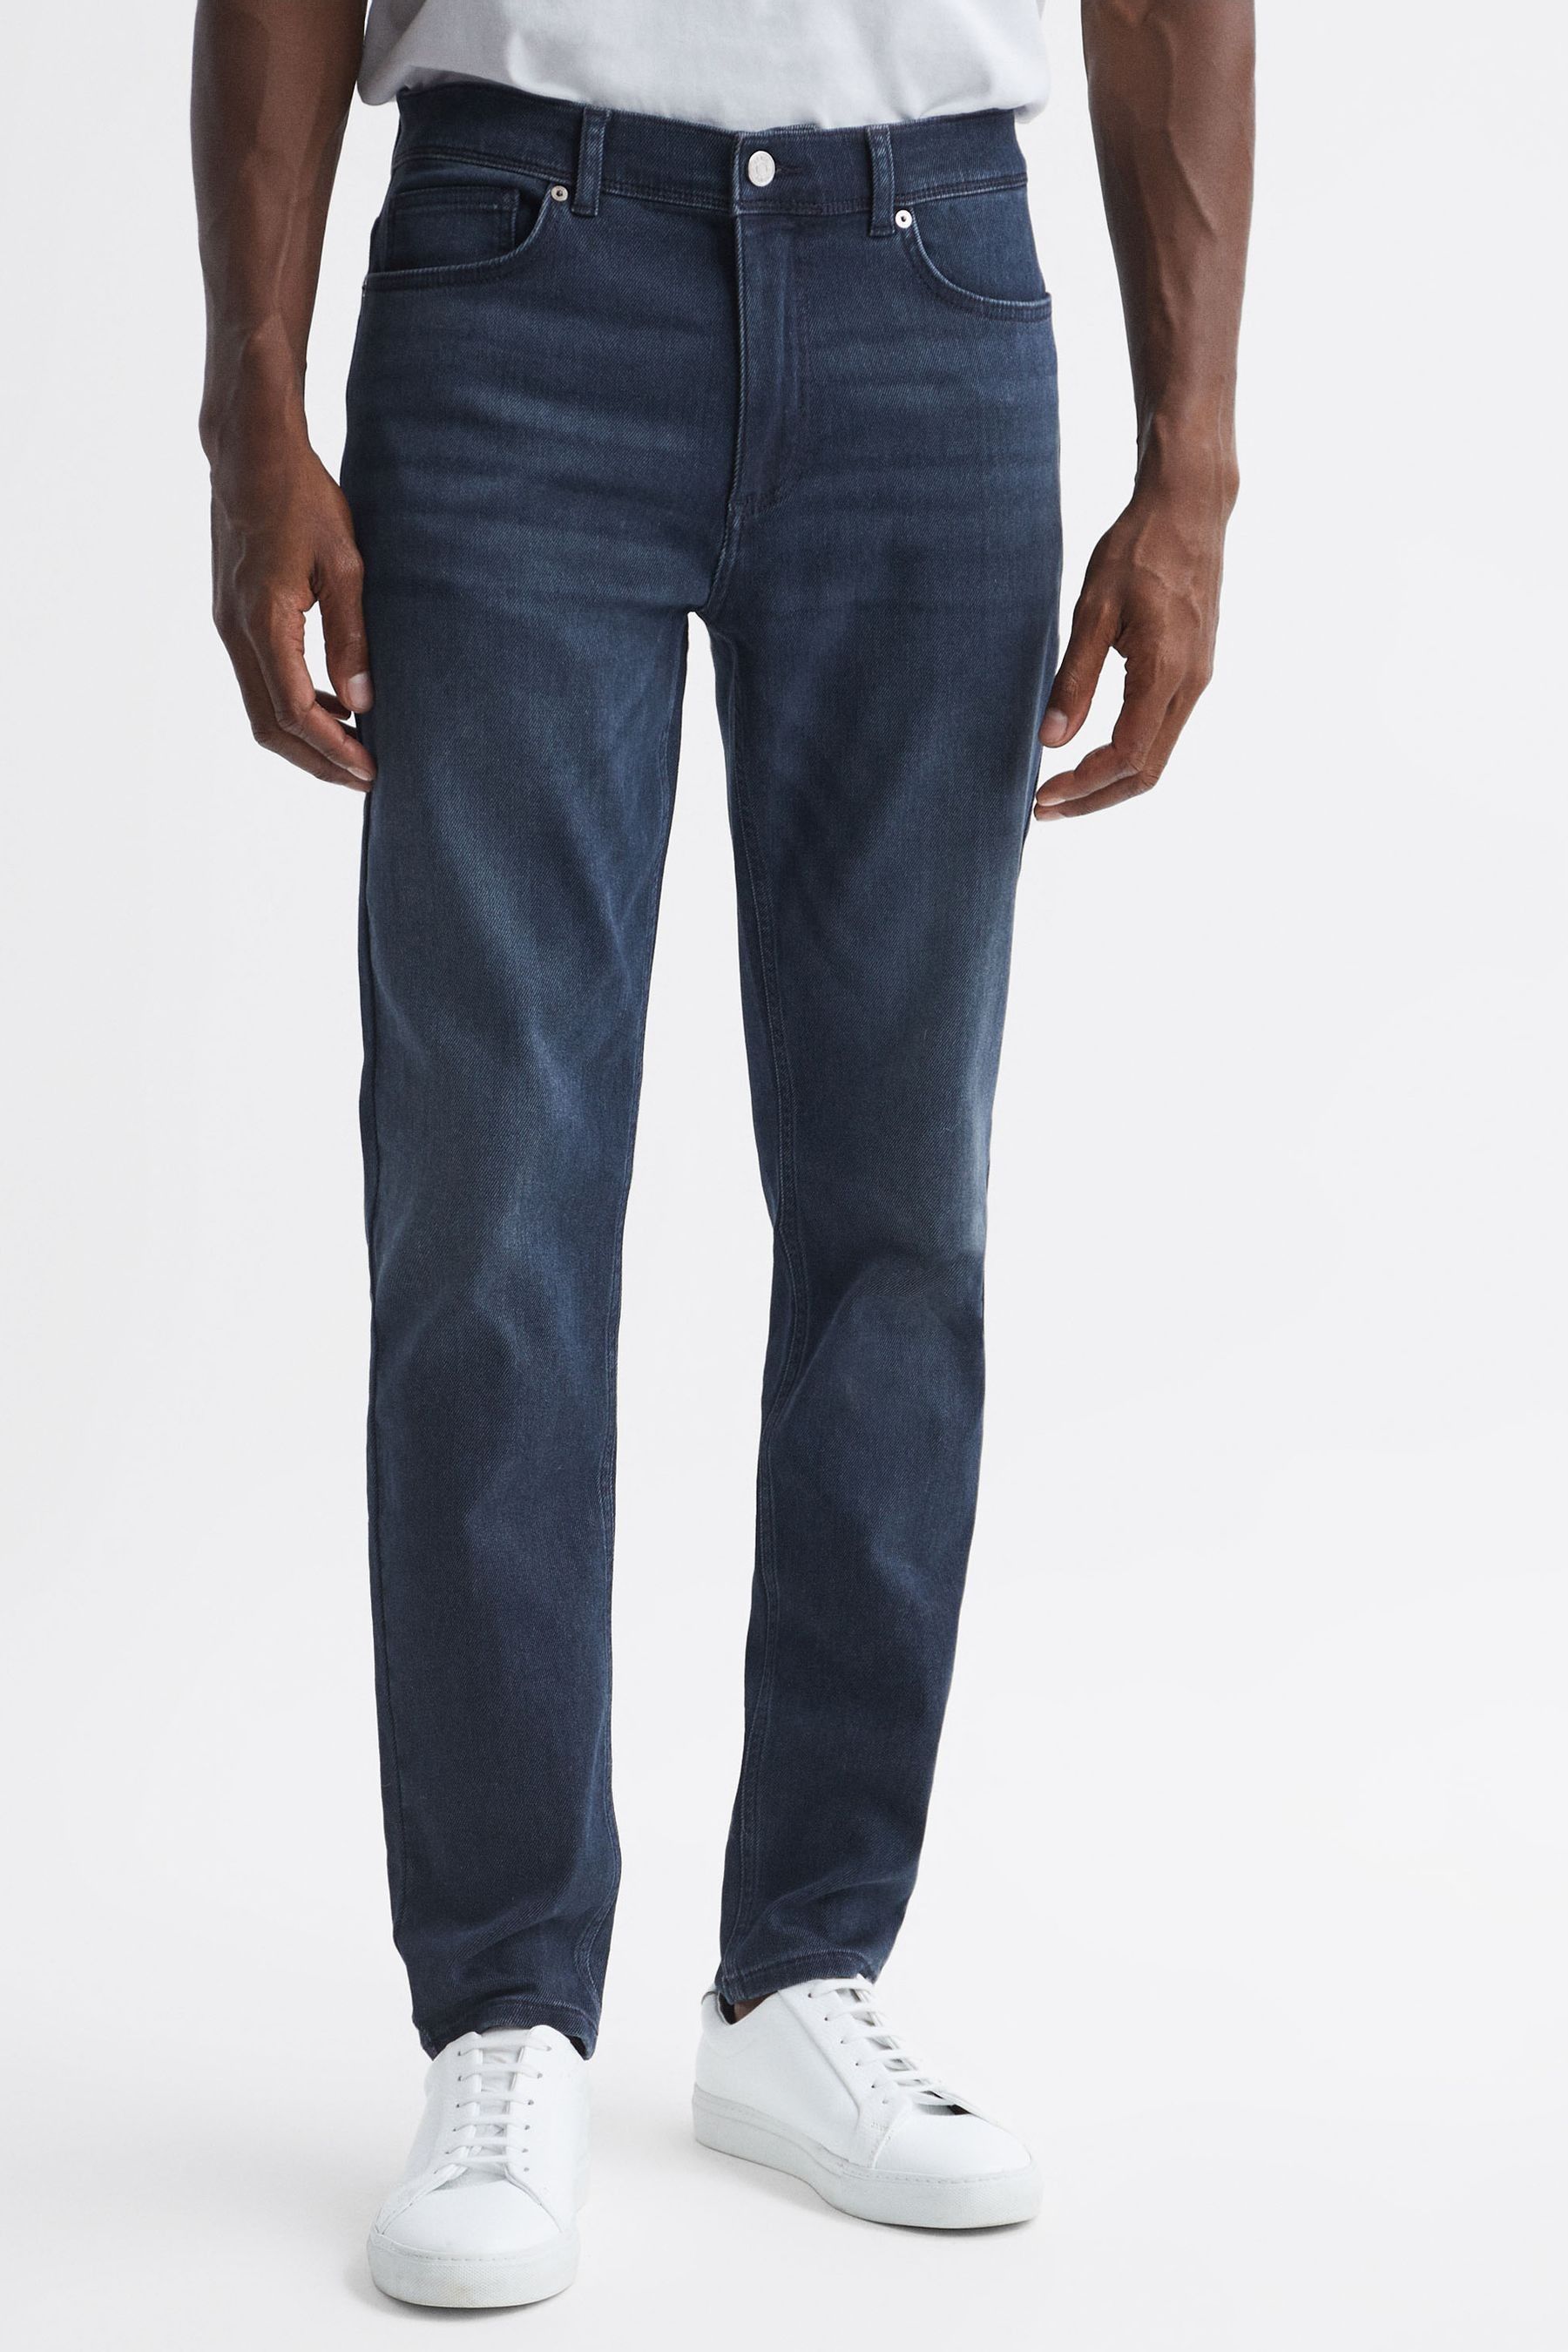 Reiss Littleton - Indigo Slim Fit Mid Rise Jeans, 30